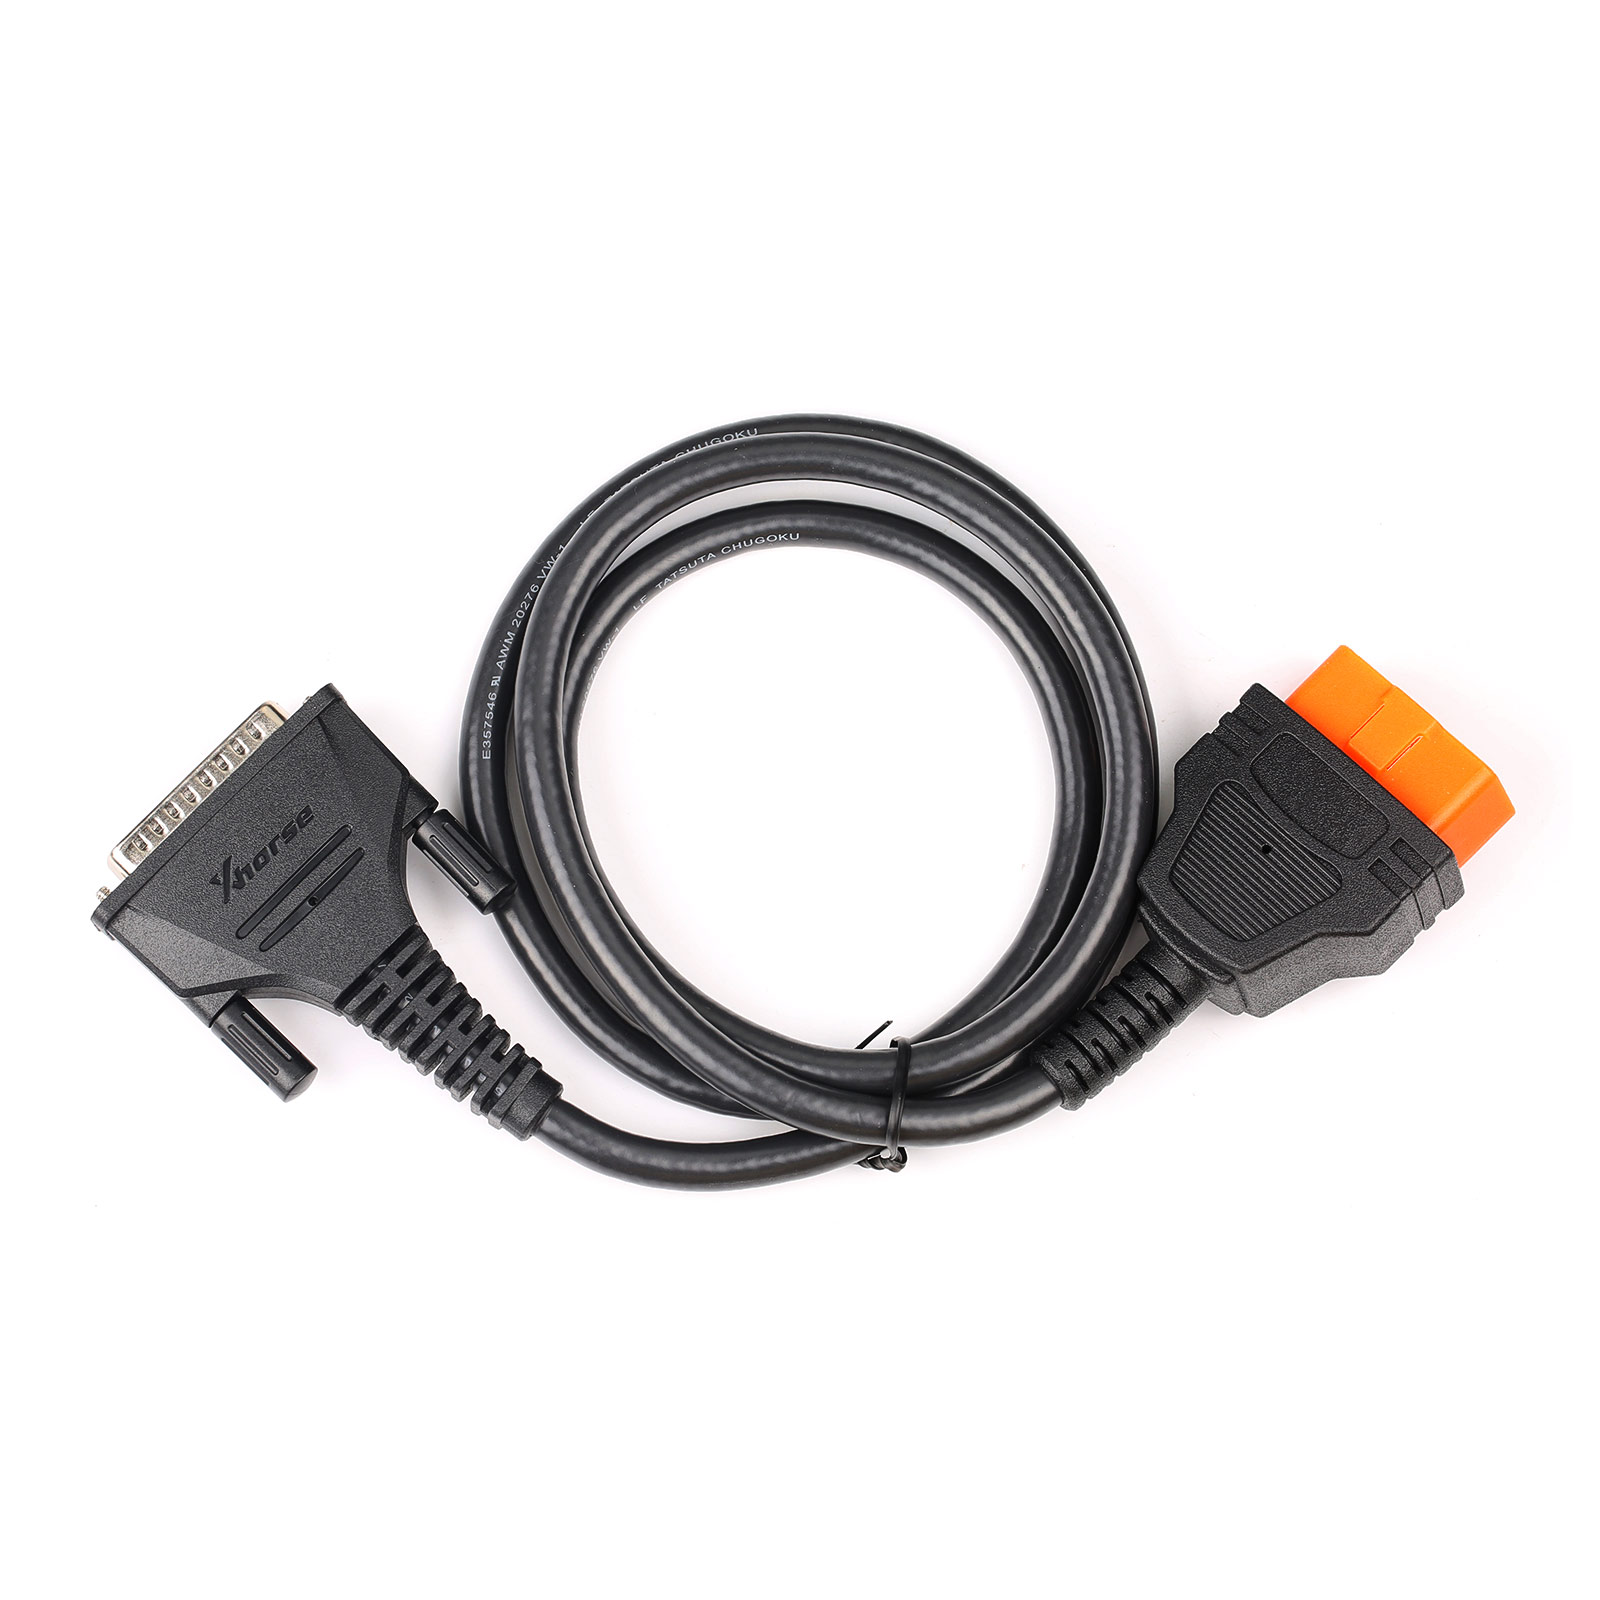 Xhorse VVDI2 Main Test Cable for VVDI 2 Commander Key Programmer